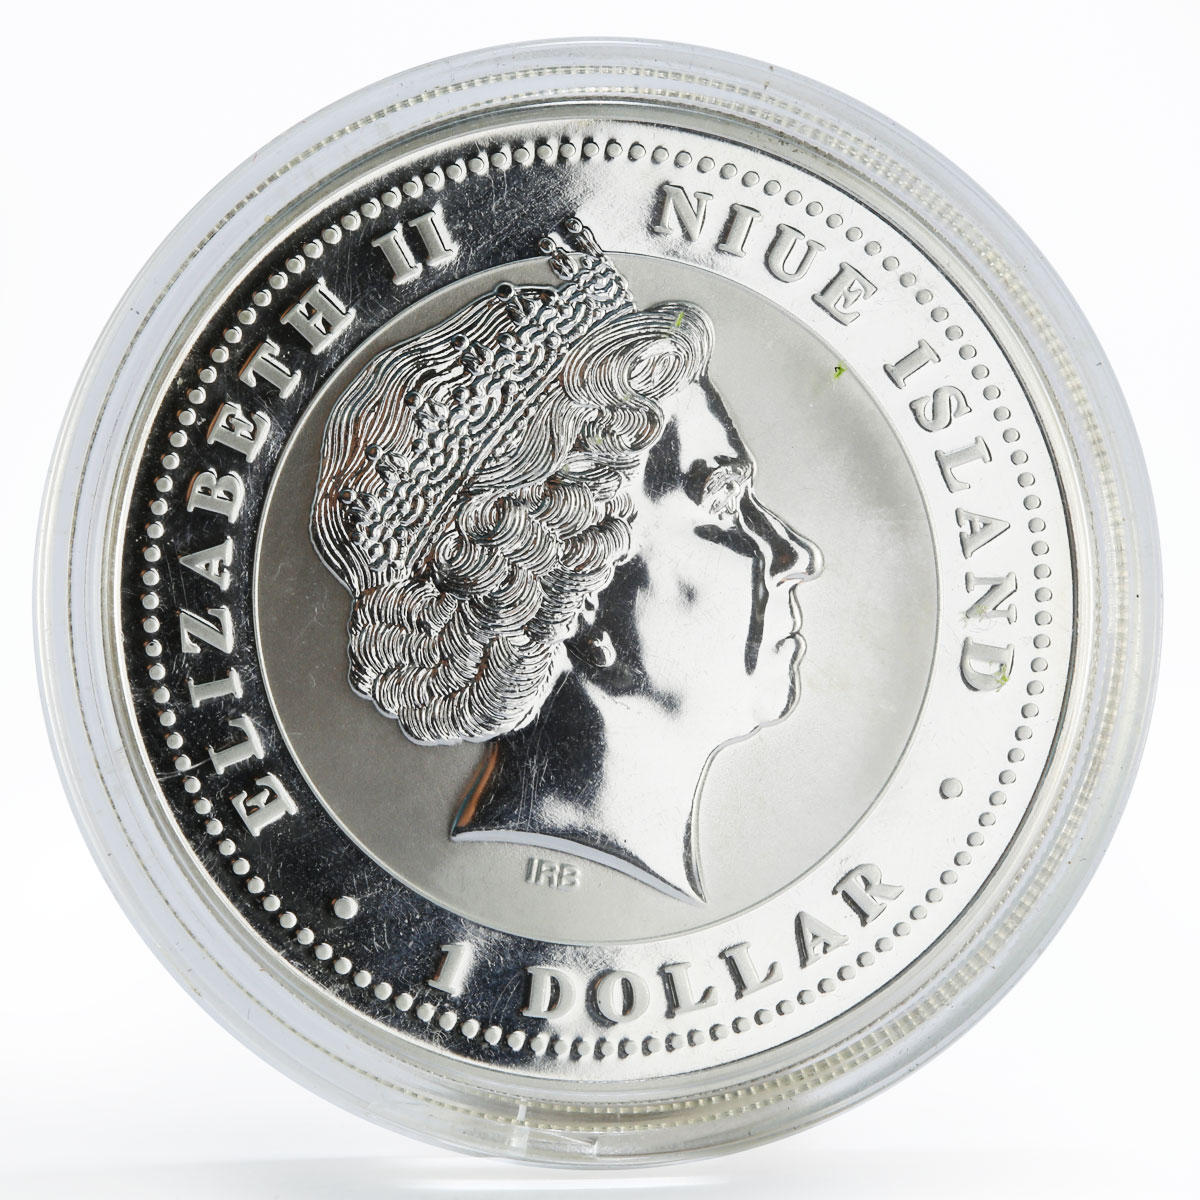 Niue 1 dollar Year of the Rat Lunar Calendar colored silver coin 2008